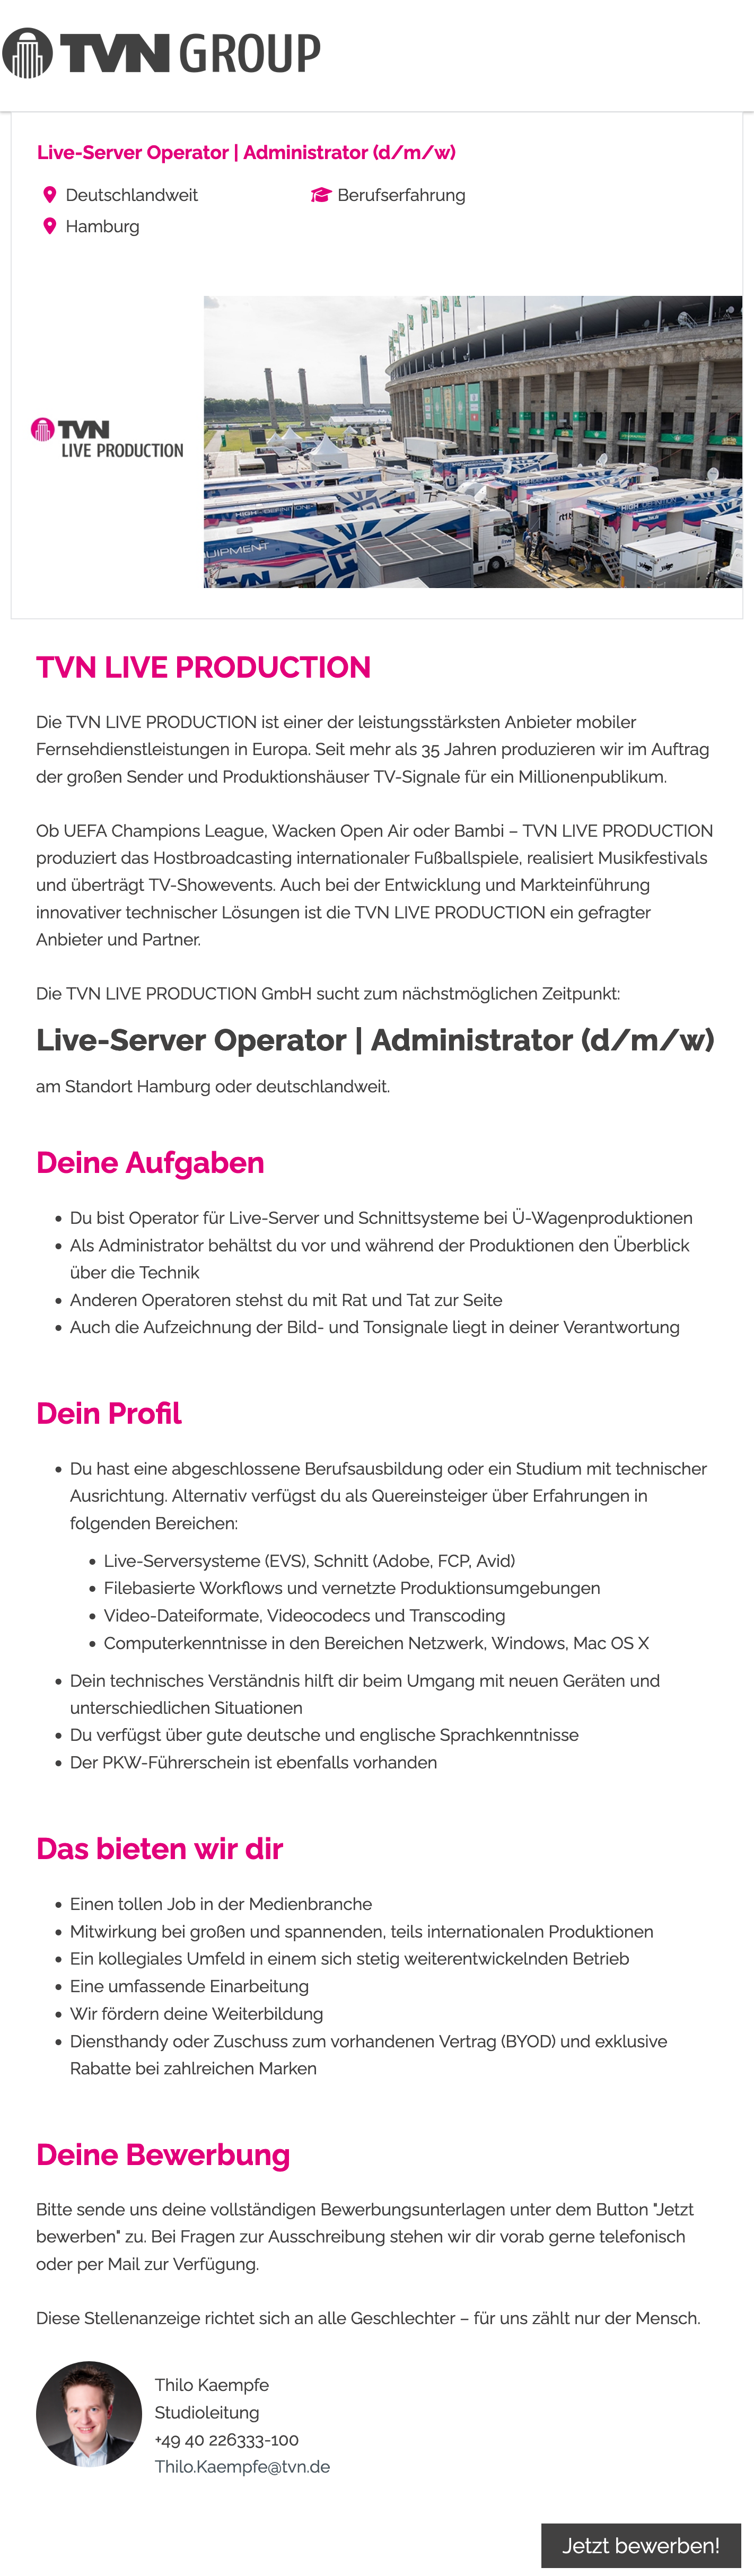 Live-Server Operator / Administrator (d/m/w)